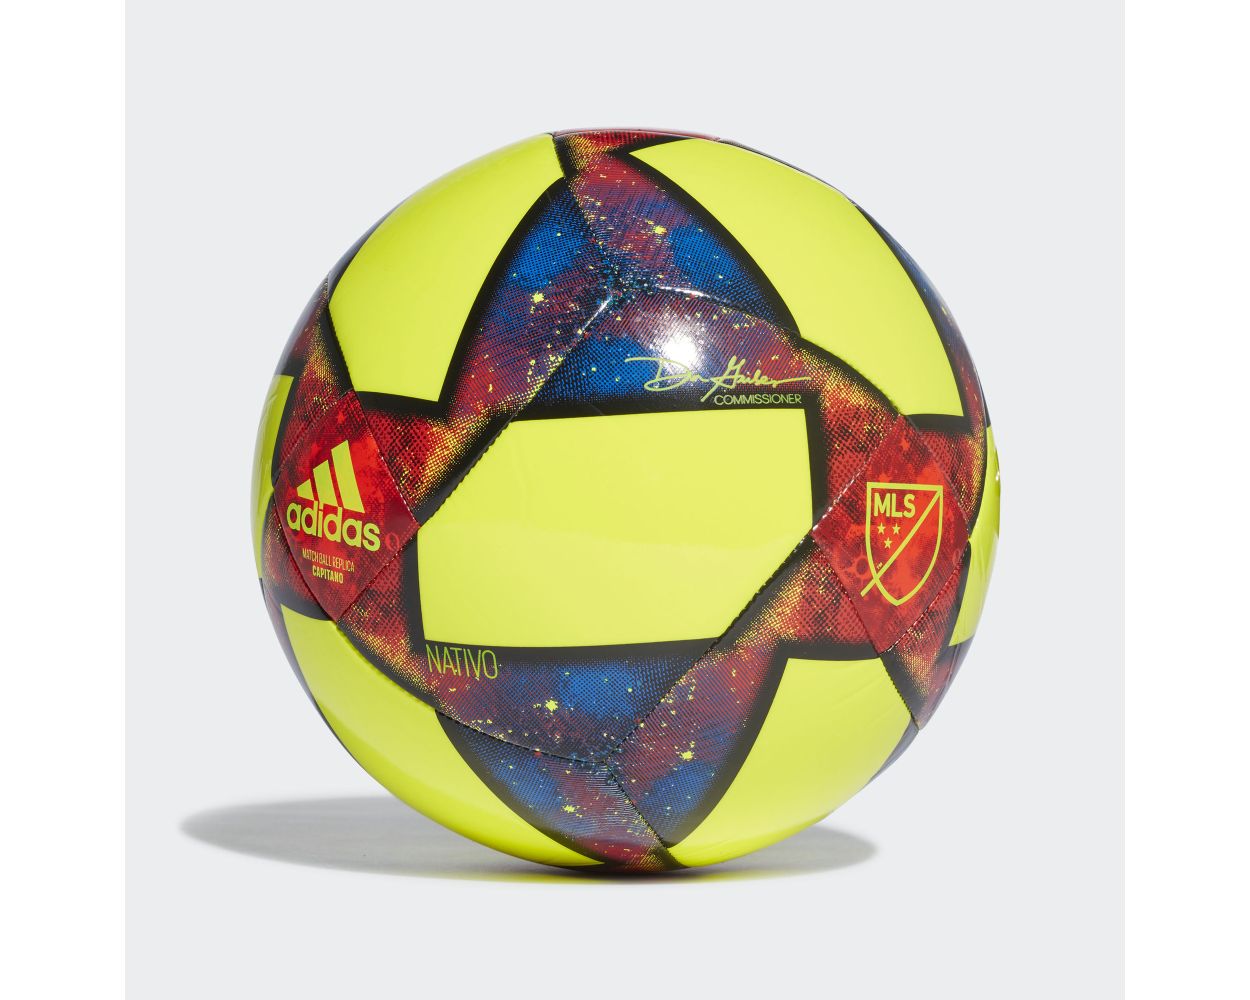 Spain 2014 Mini Soccer Ball - adidas Capitano Mini Soccer Ball